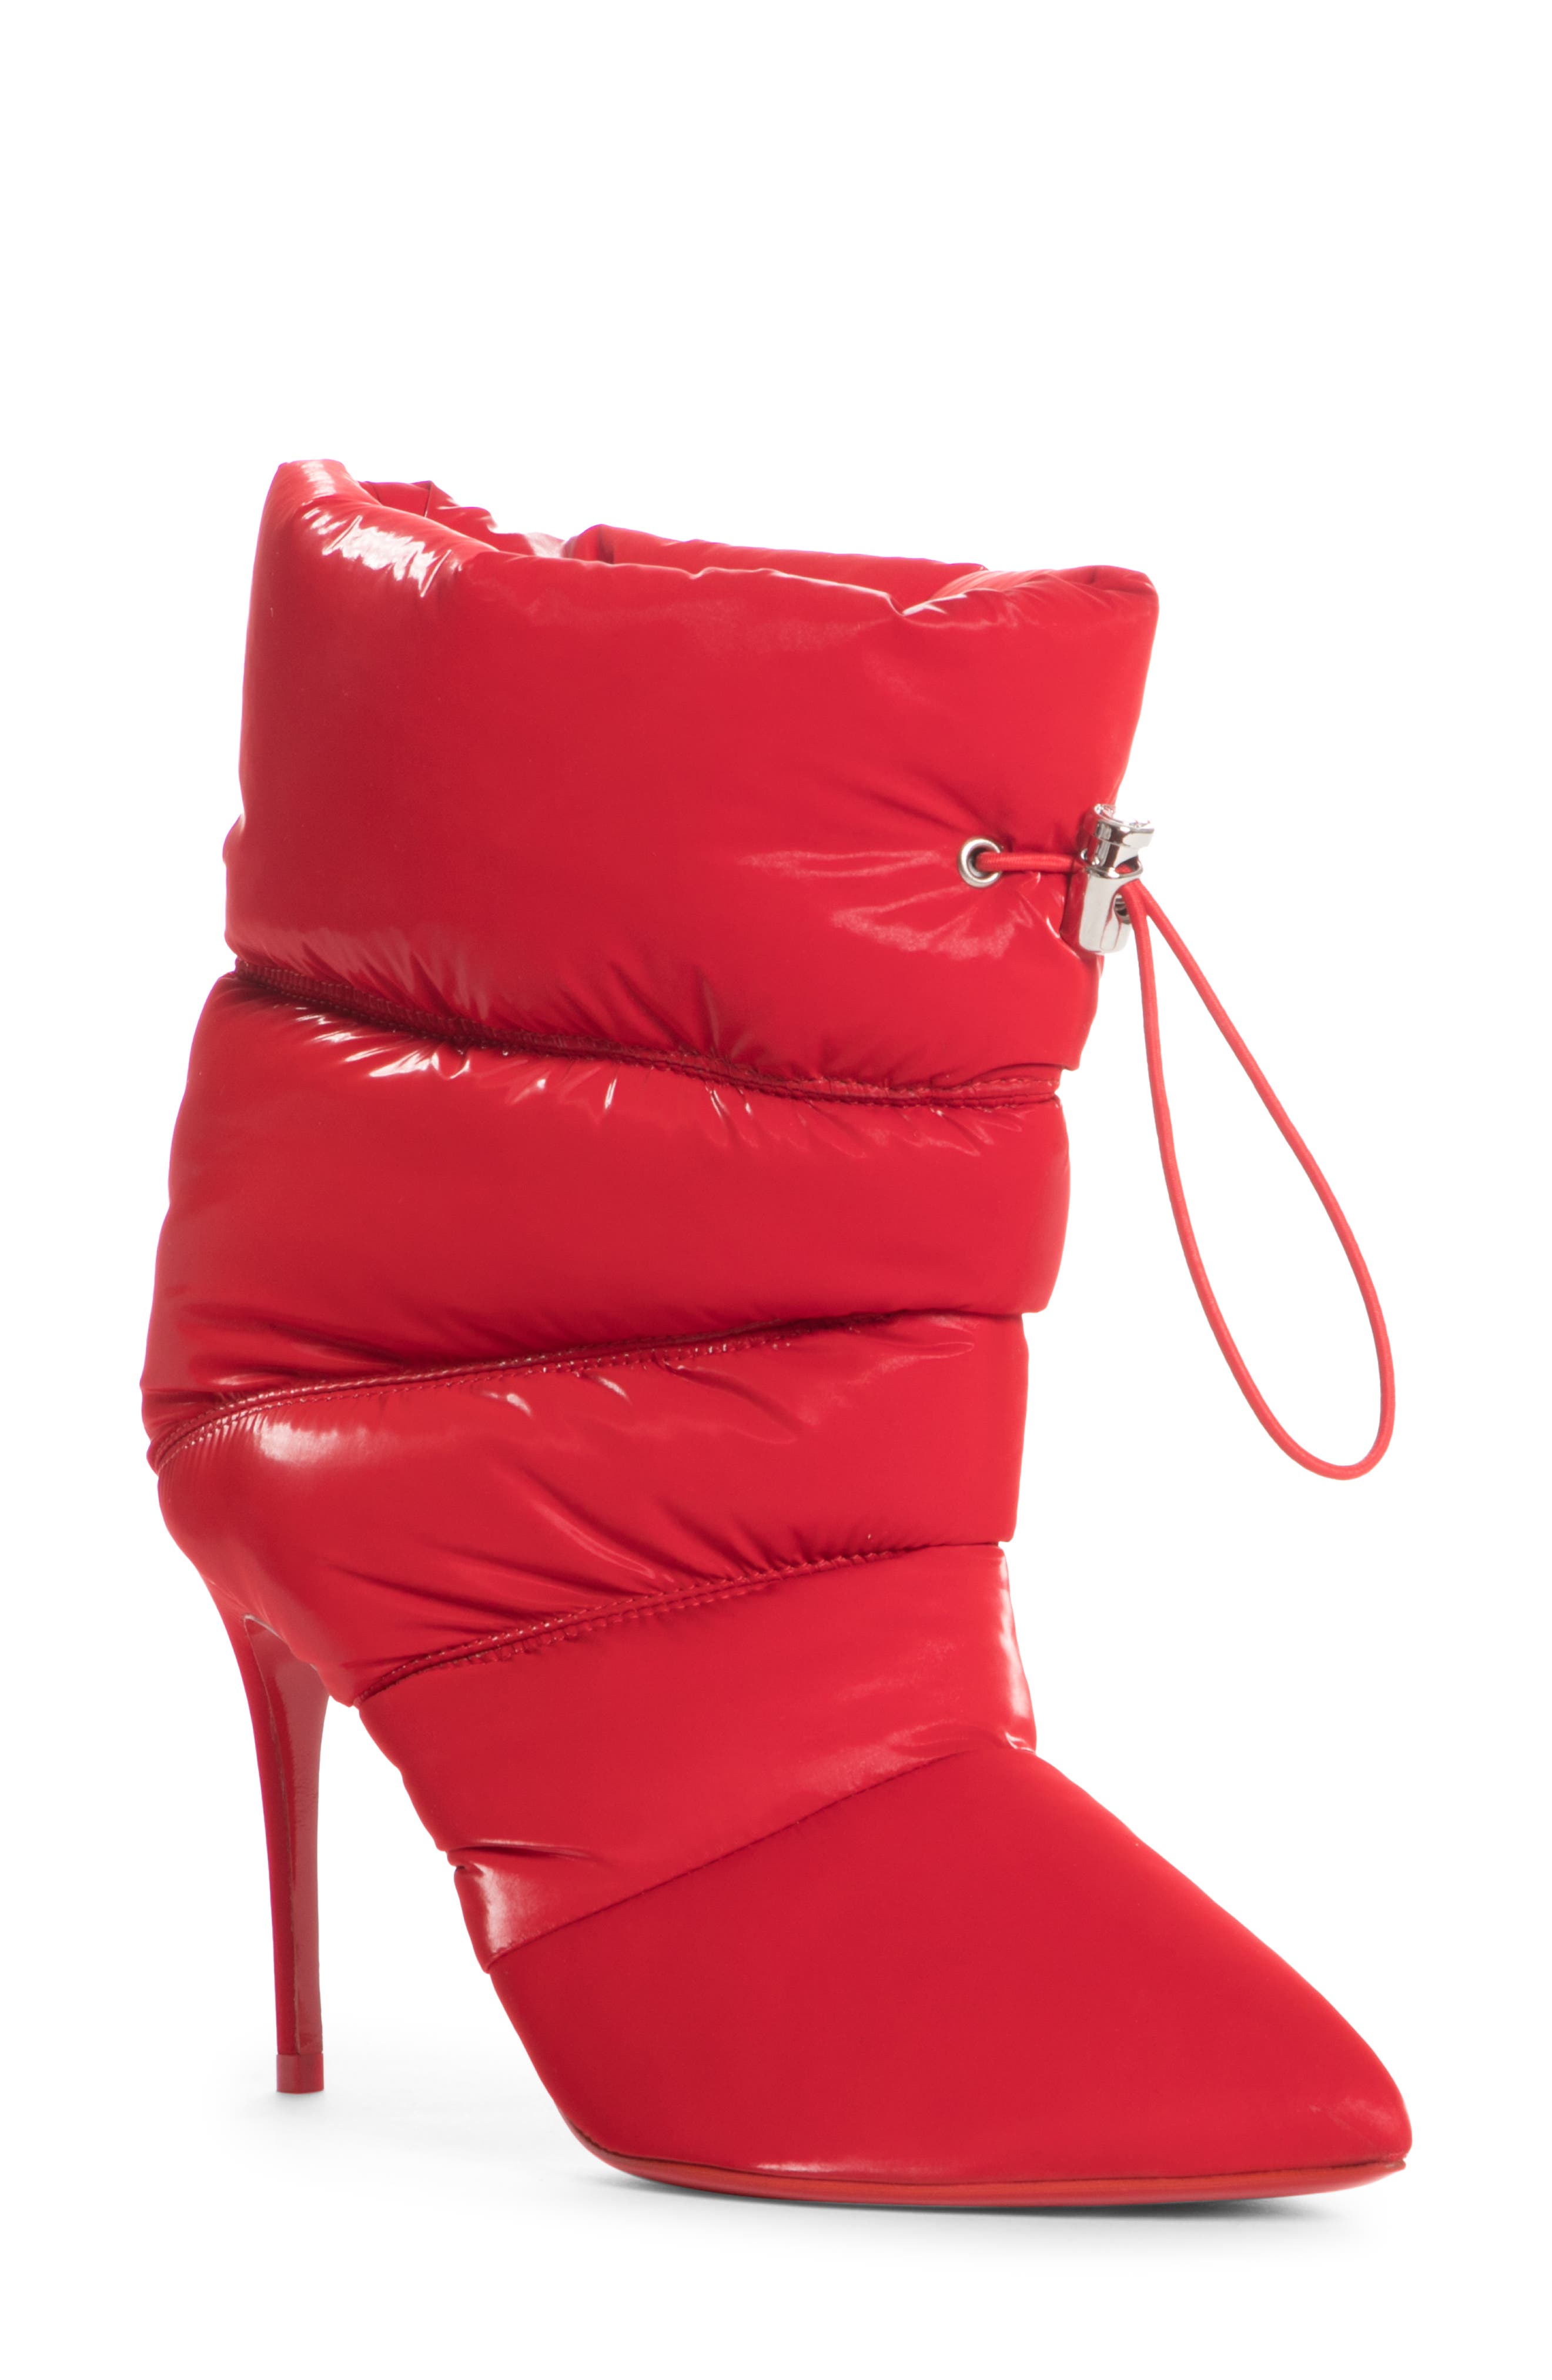 red bottom heels price range